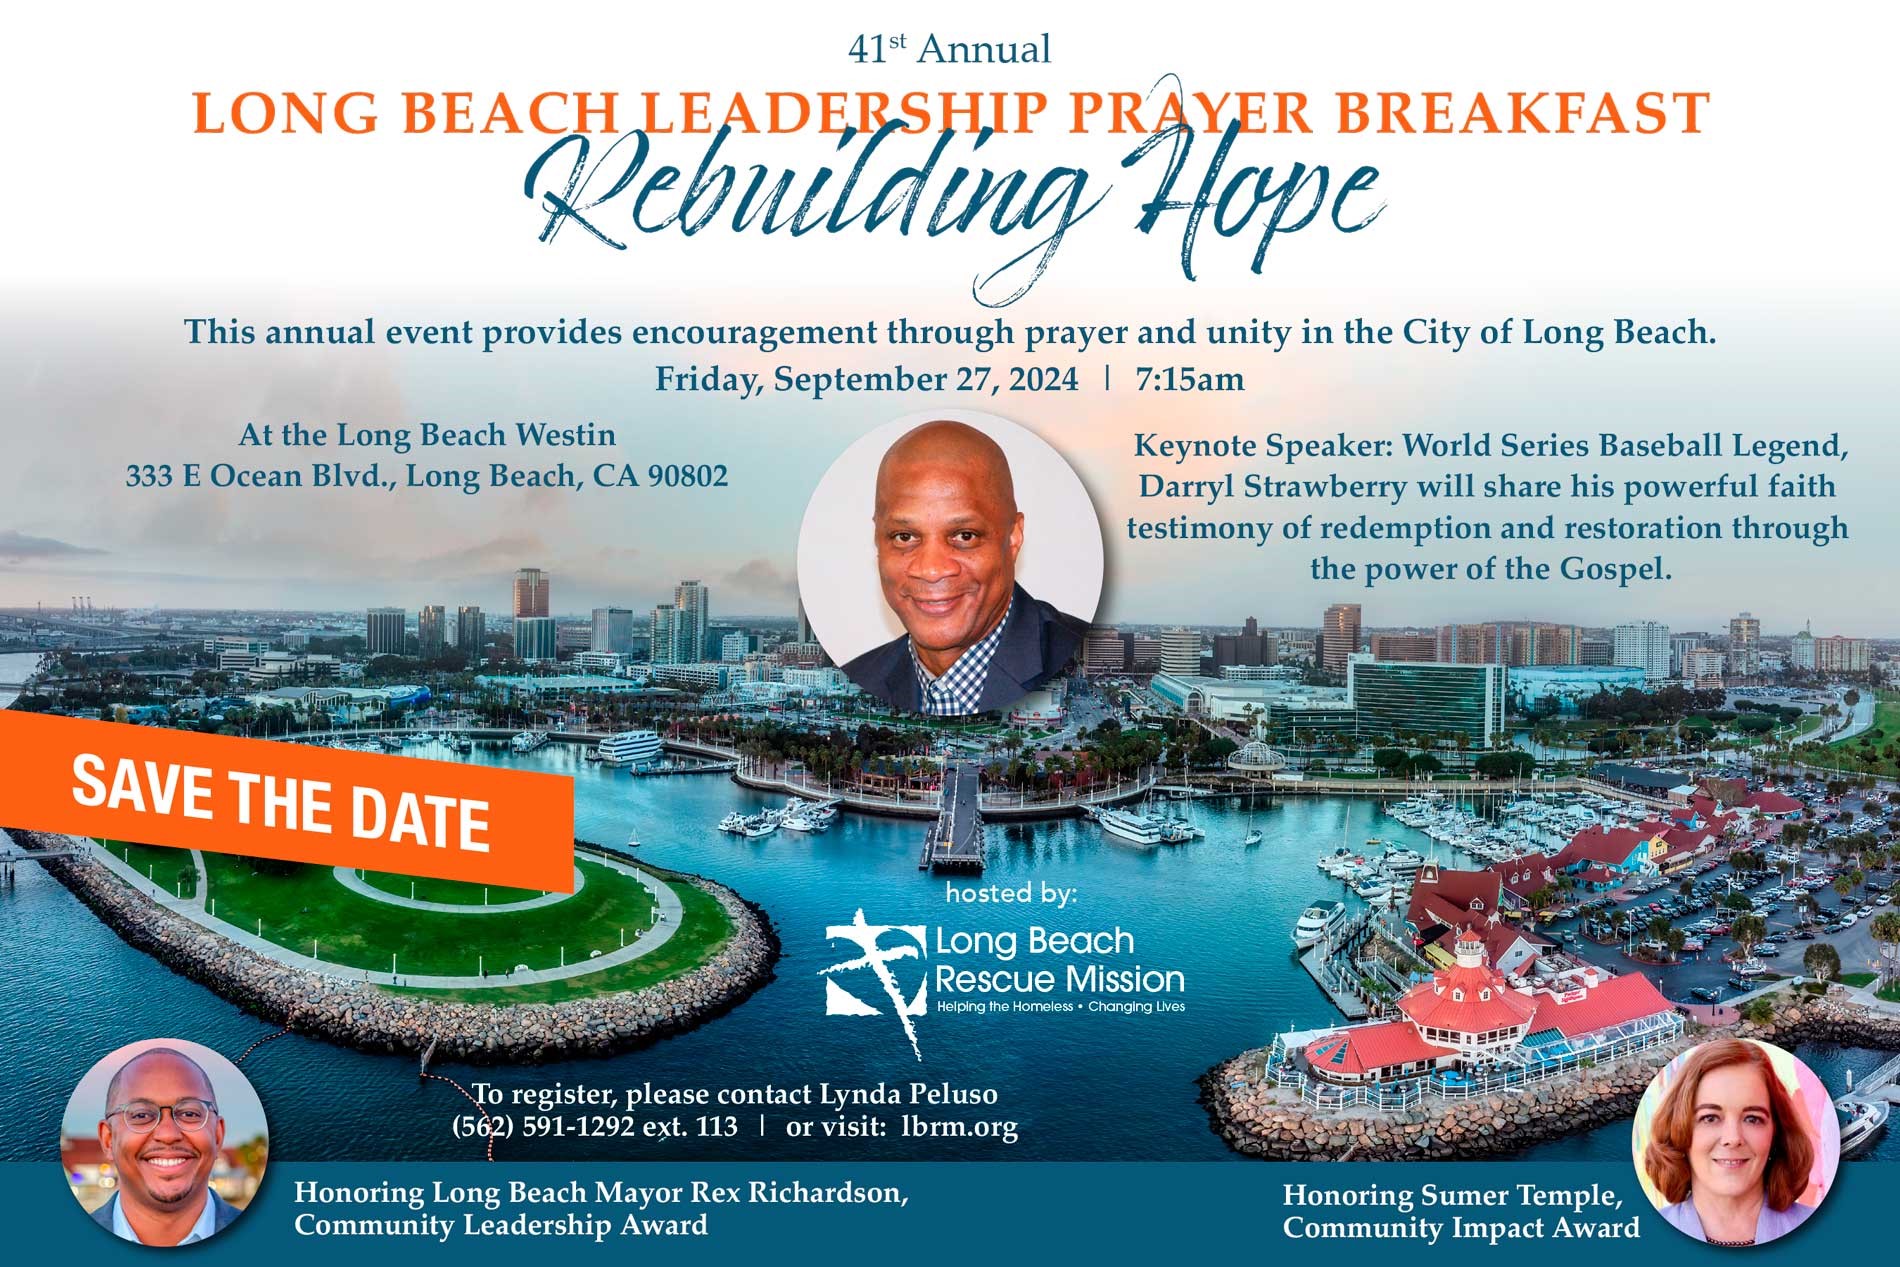 SAVE THE DATE: 41st Annual LB Leadership Prayer Breakfast